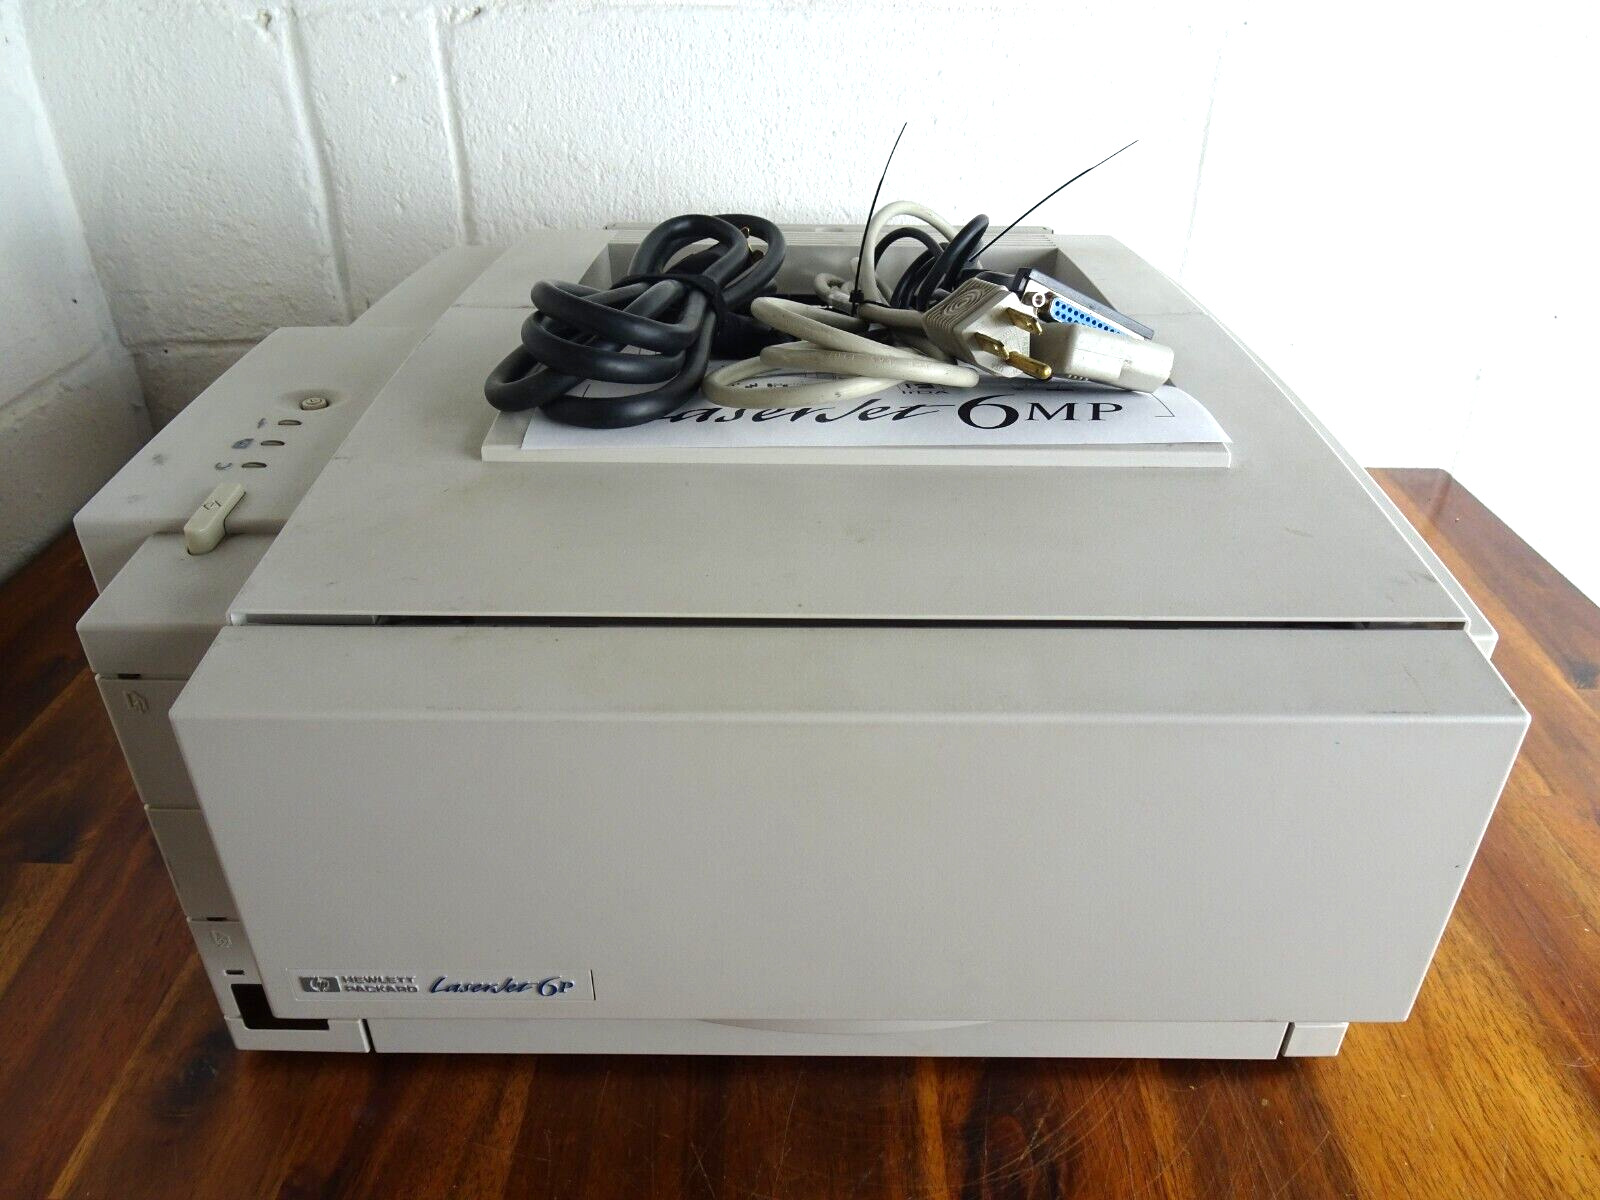 HP LaserJet 6P C3980A Monochrome Laser Printer Vintage 1996 Tested and Working